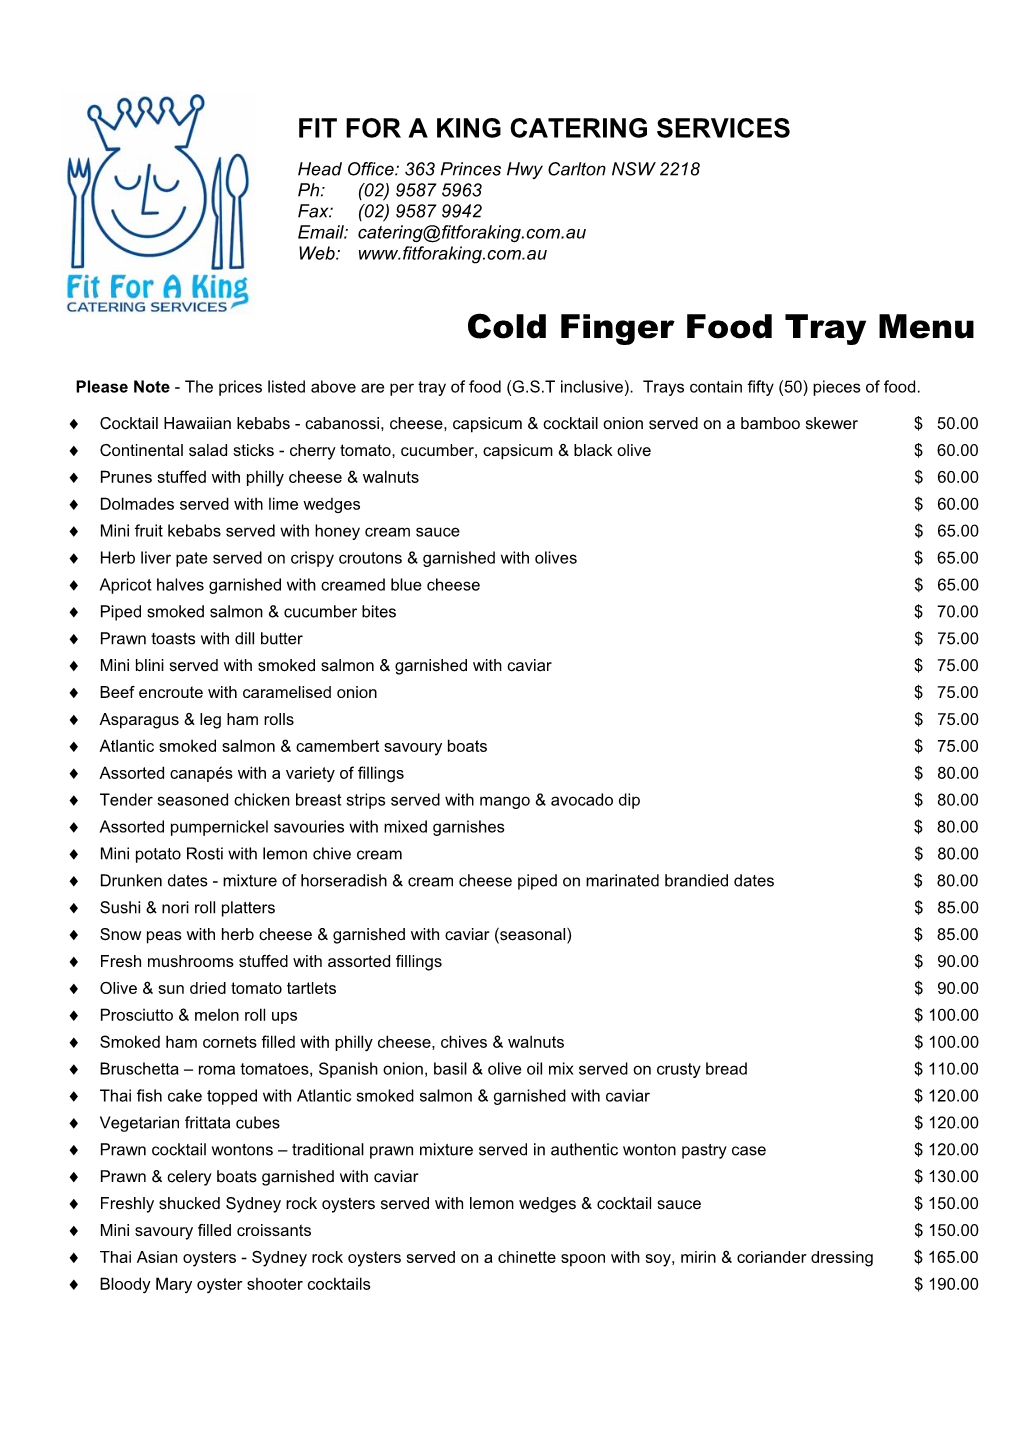 Cold Finger Food Tray Menu